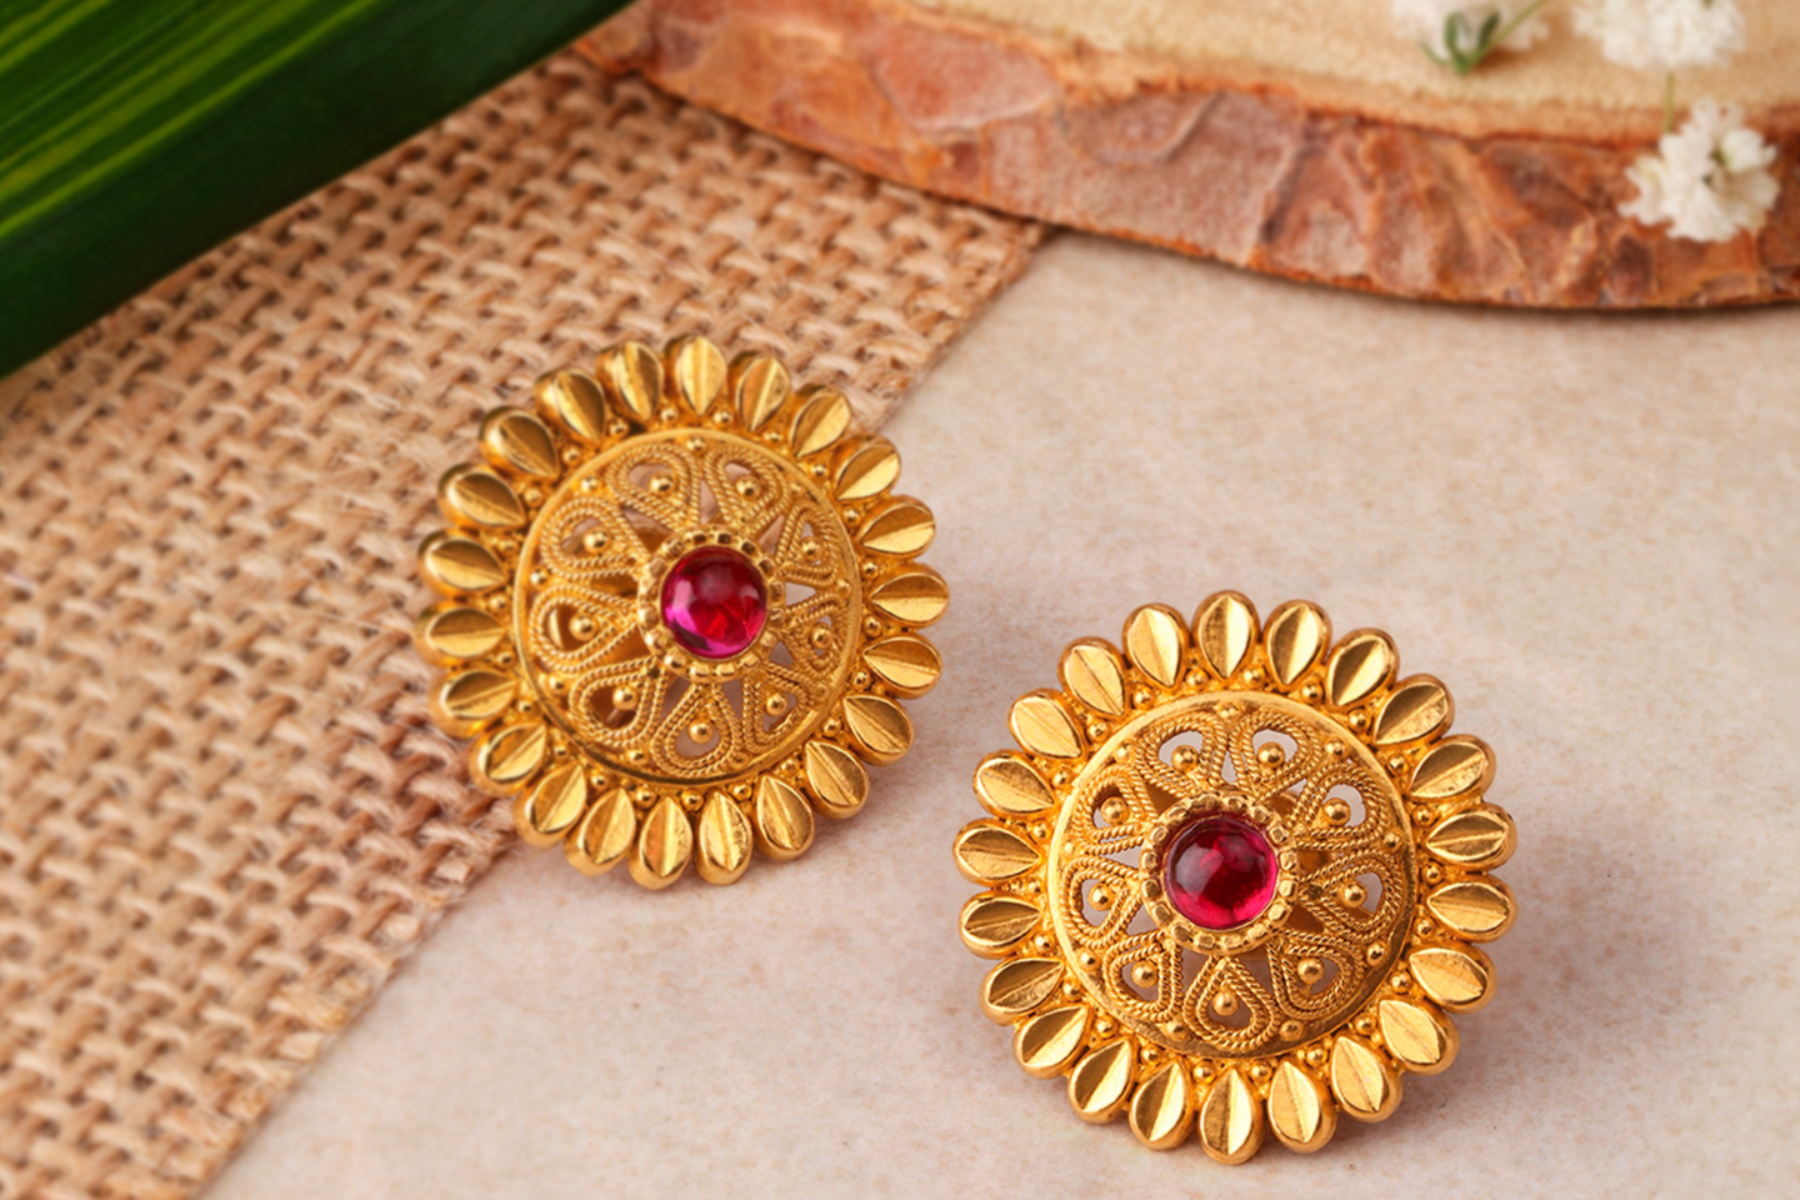 A pair of flower-shaped diamond earrings